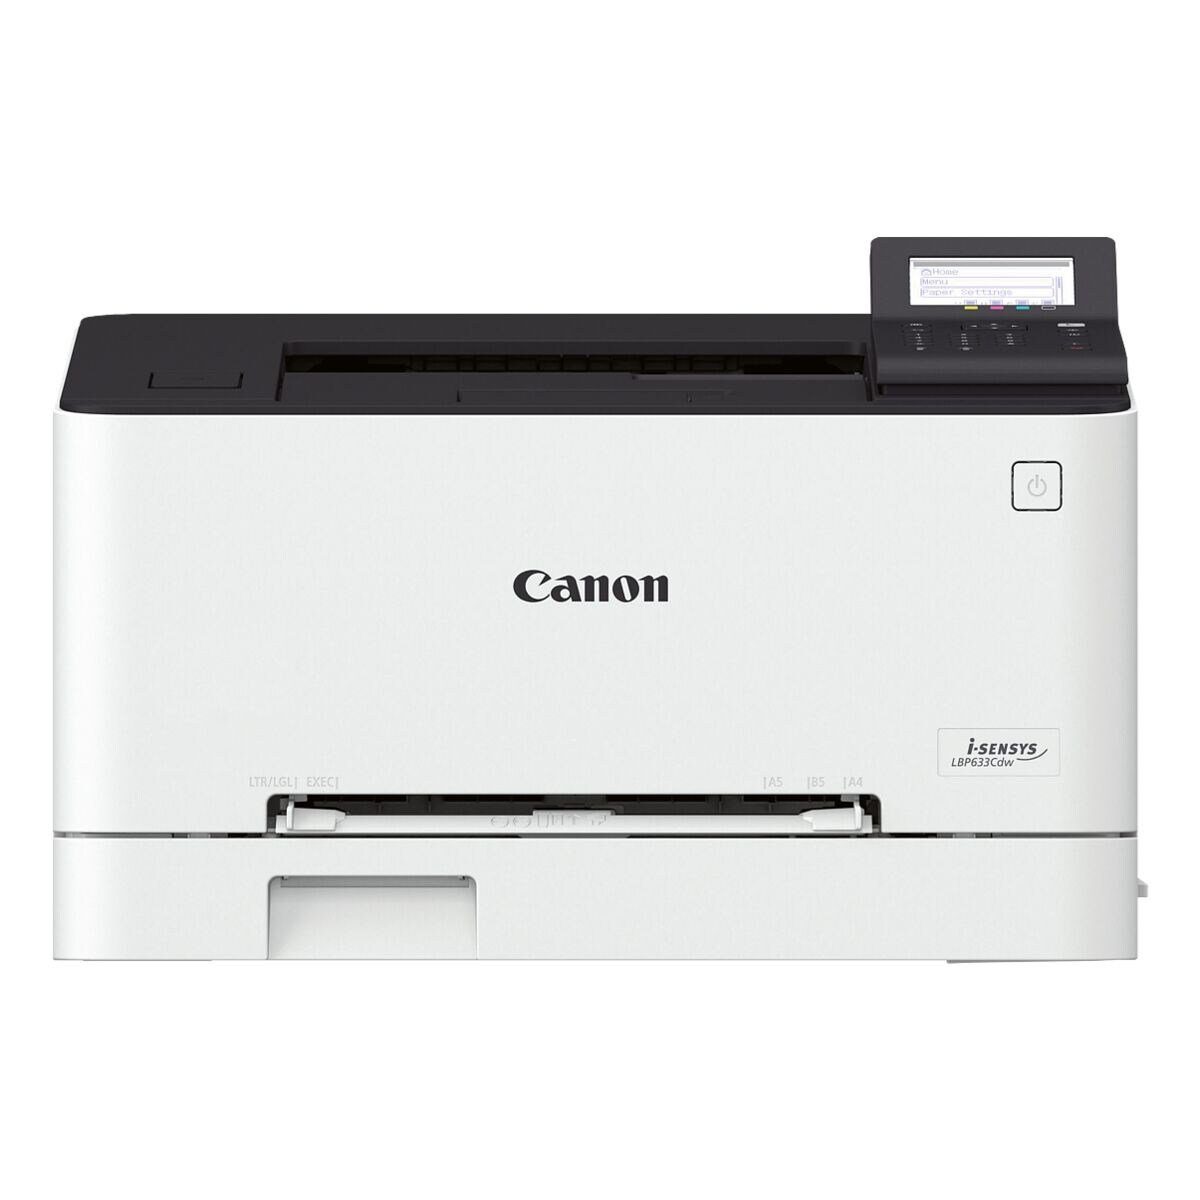 WLAN, i-SENSYS x 1200 Canon A4) LBP633Cdw Farblaserdrucker, dpi, 1200 (LAN,